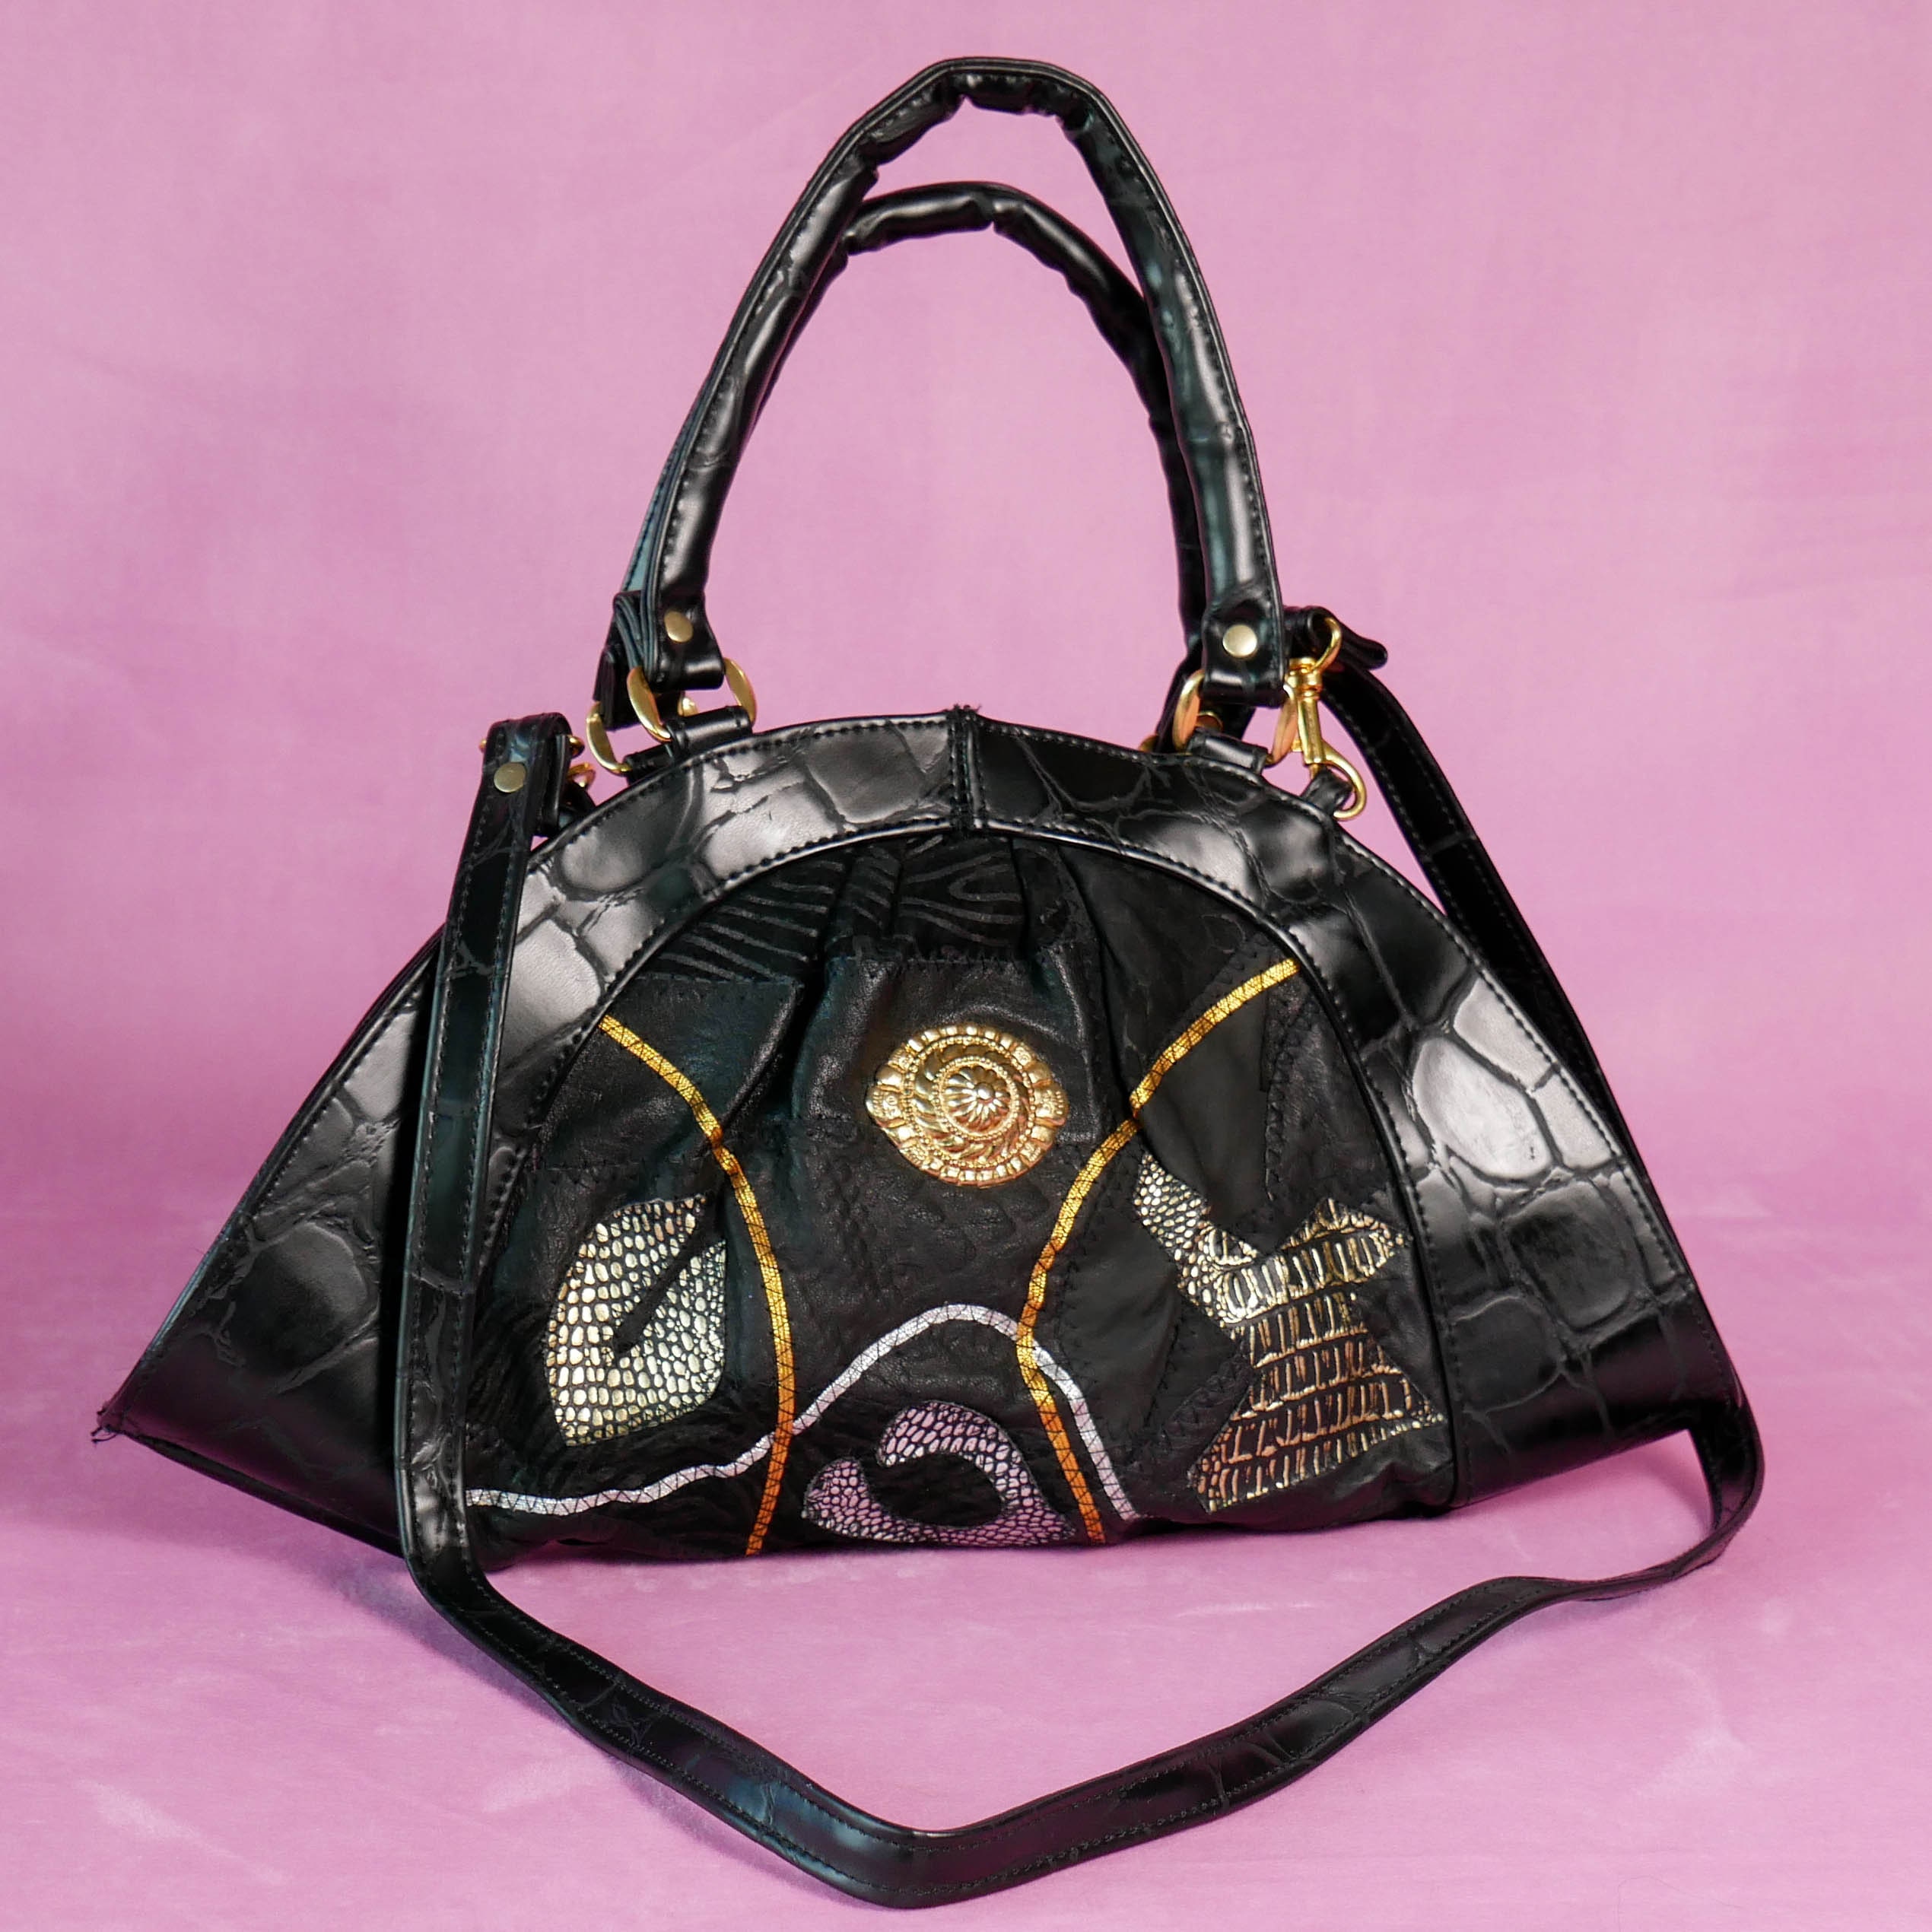 Vintage 80s Purse - 48 For Sale on 1stDibs  80s handbags, 80's purses, 80's  purse style